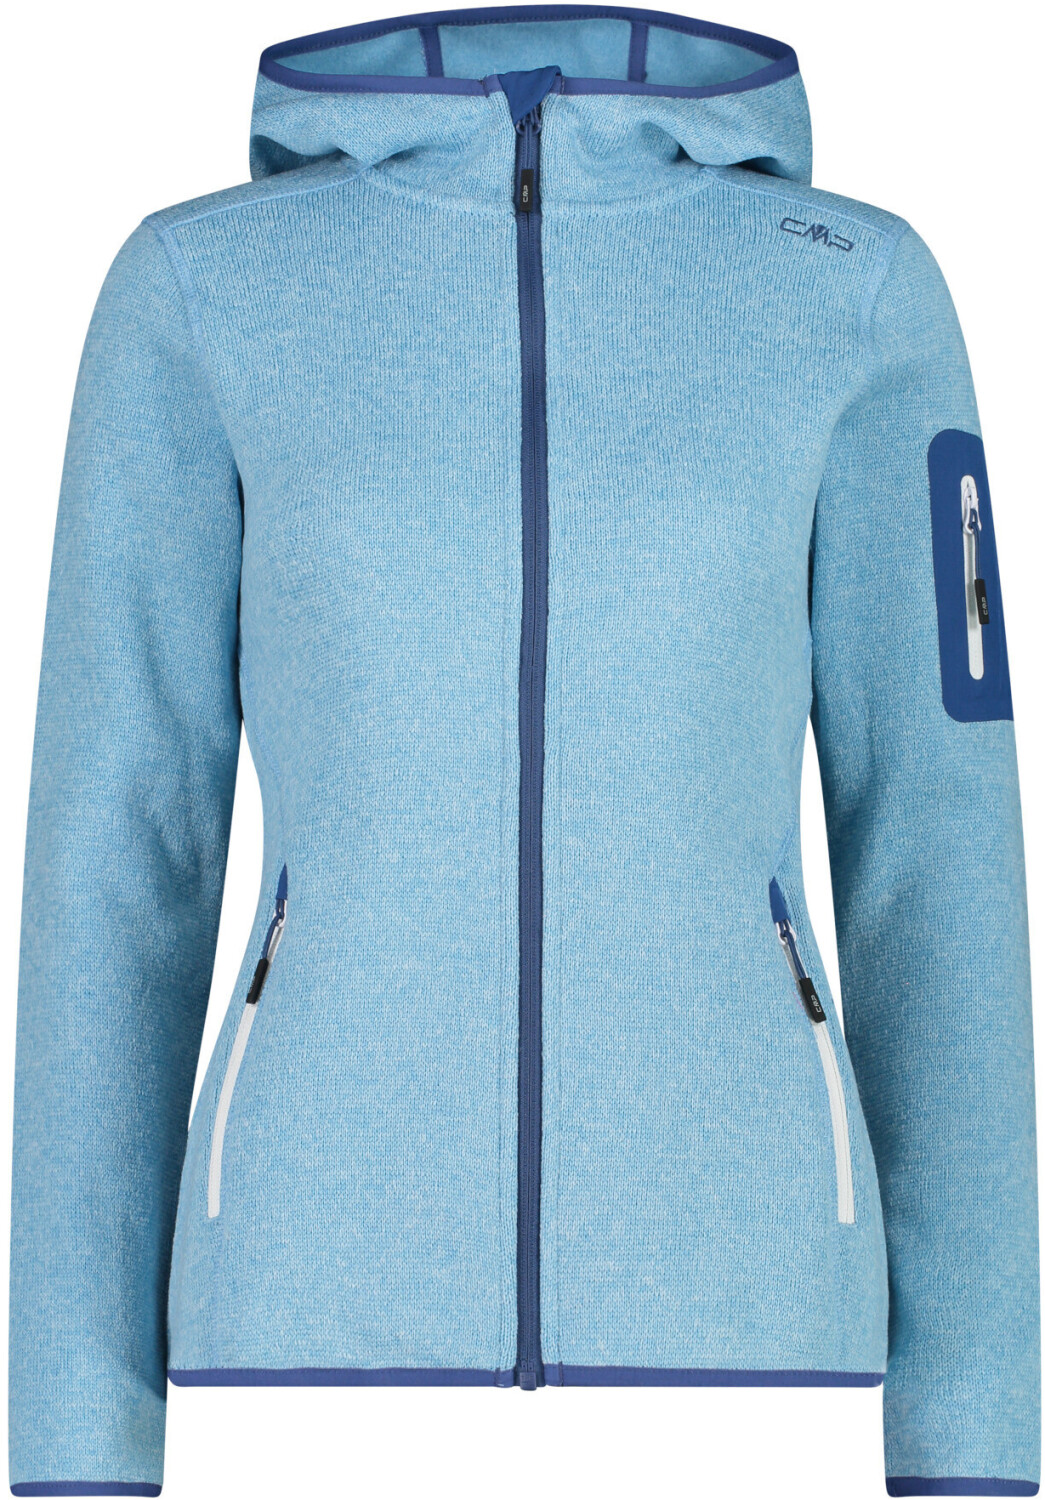 CMP Woman Fleece Jacket Fix Hood (3H19826) cielo/dusty blue ab 32,46 € |  Preisvergleich bei